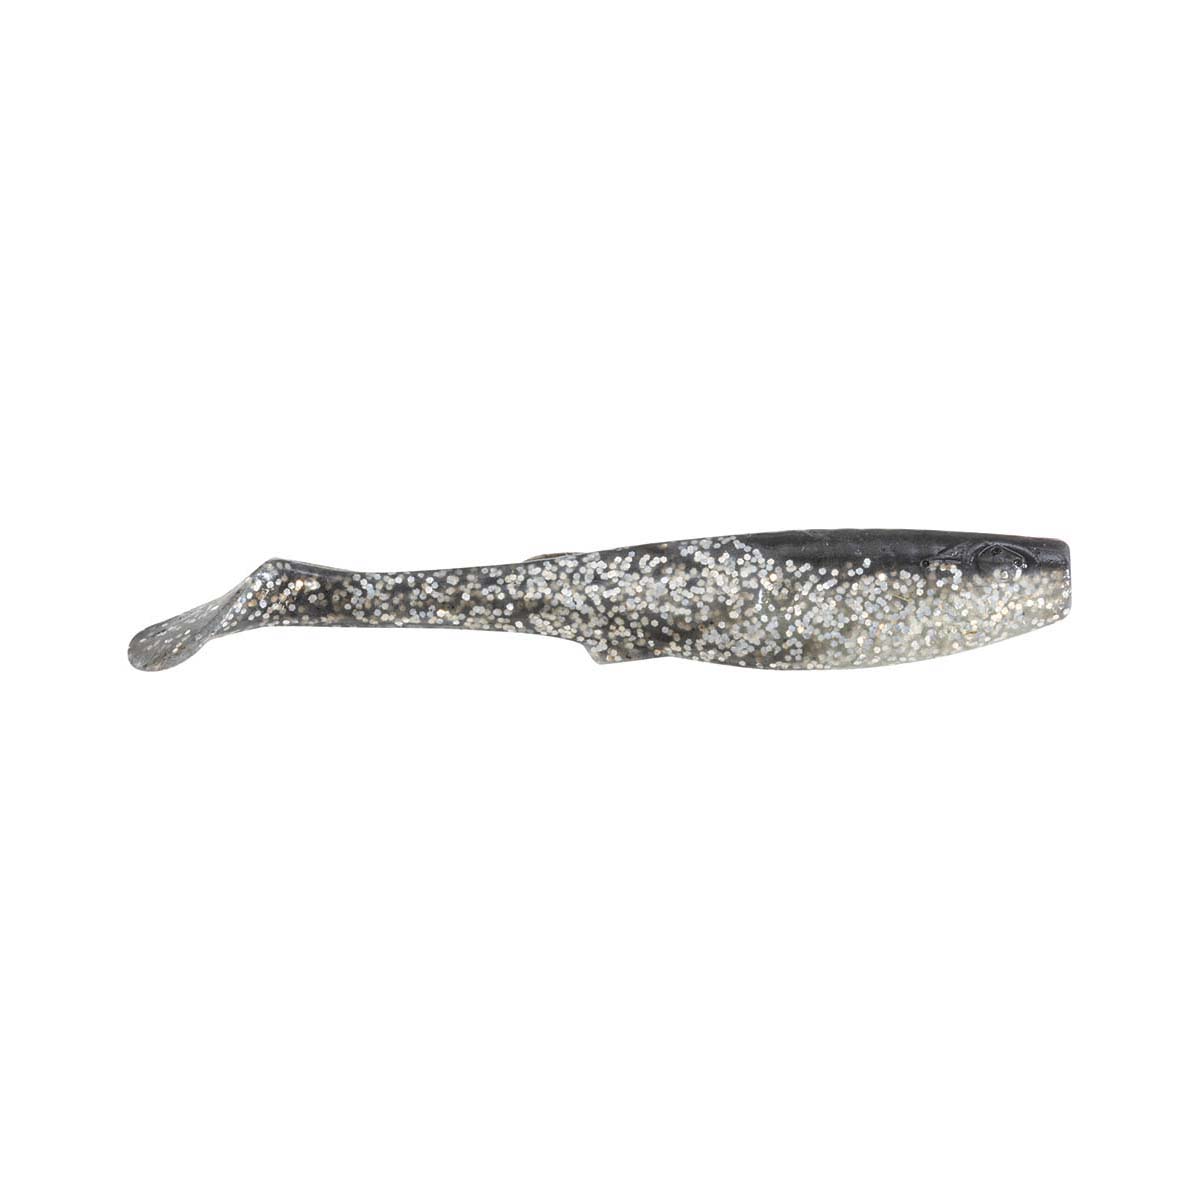 Berkley Gulp! Paddletail Shad Soft Plastic Lure 3in Black / Silver